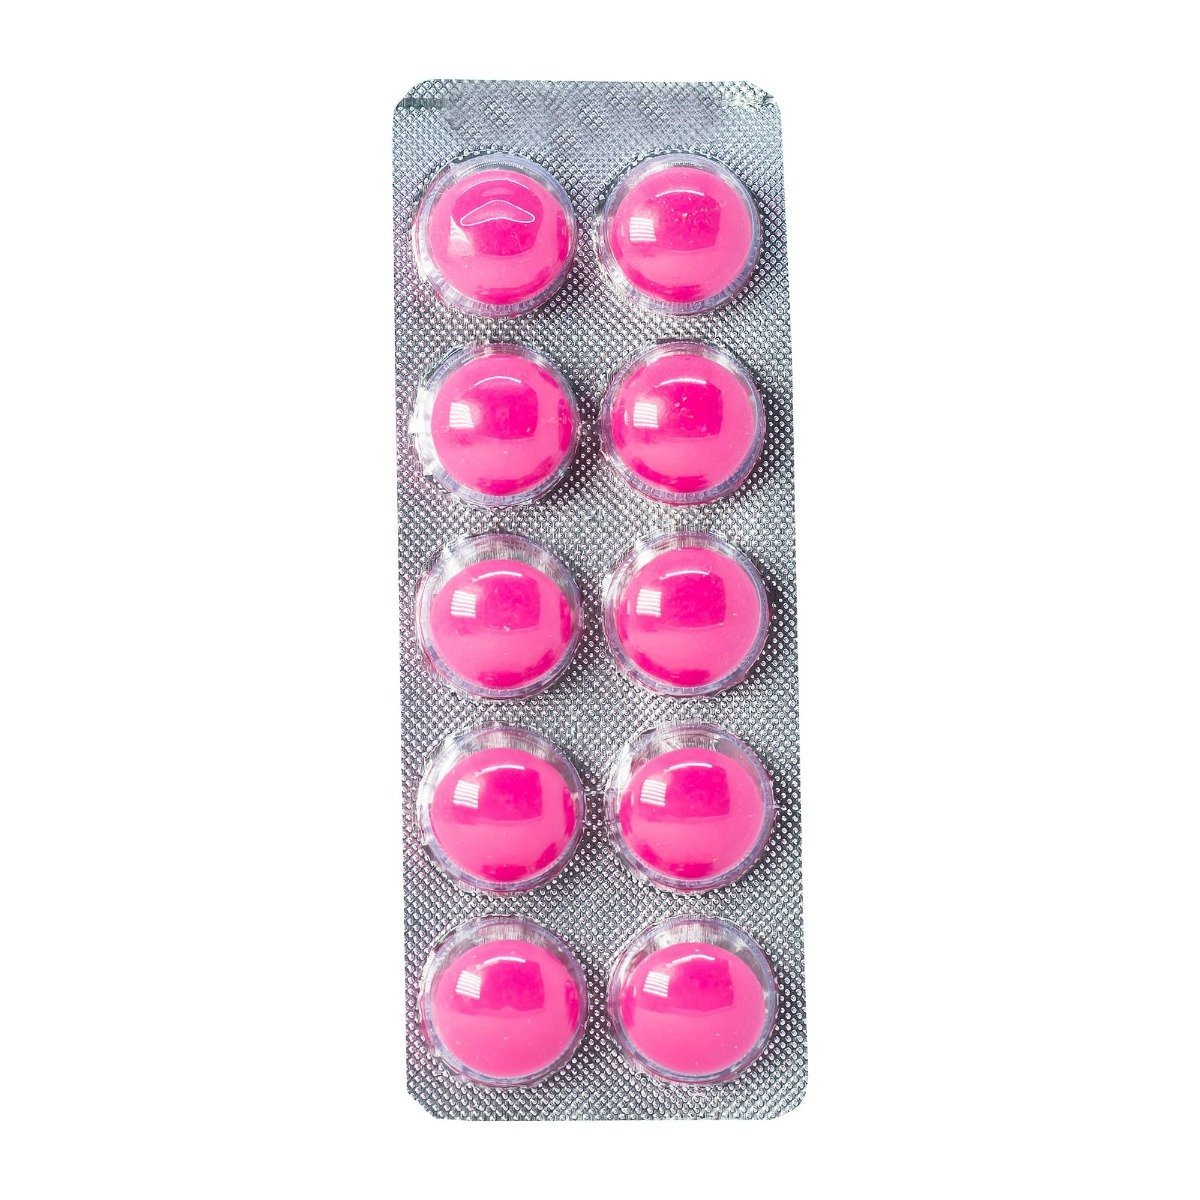 Brufen 400 mg - 30 Tablets - Bloom Pharmacy